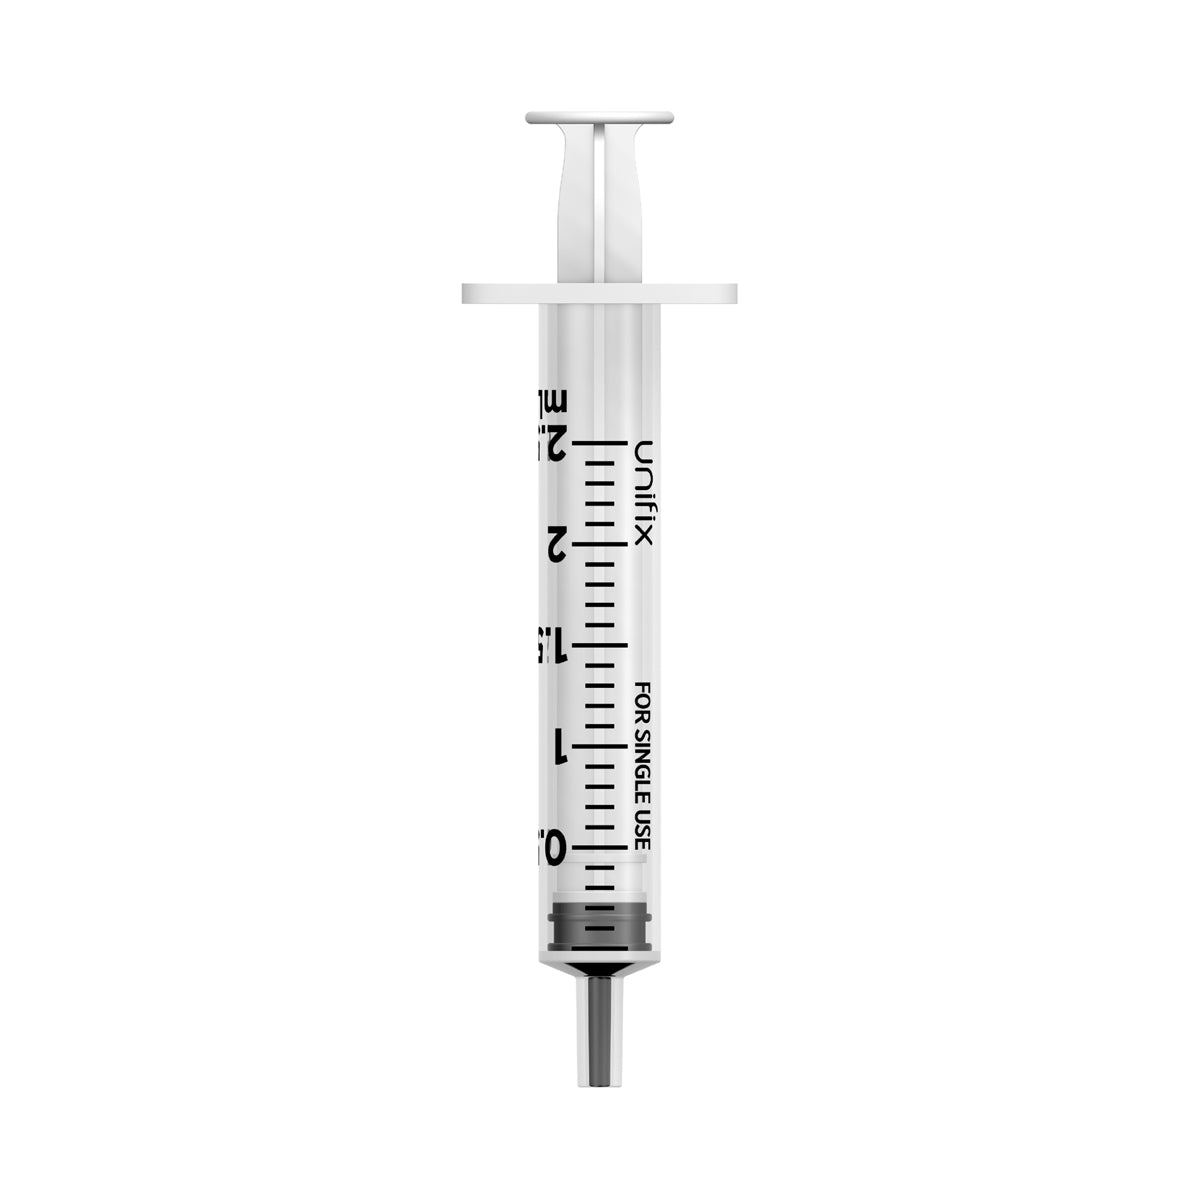 2mL Unifix Reduced Dead Space Syringe X 100